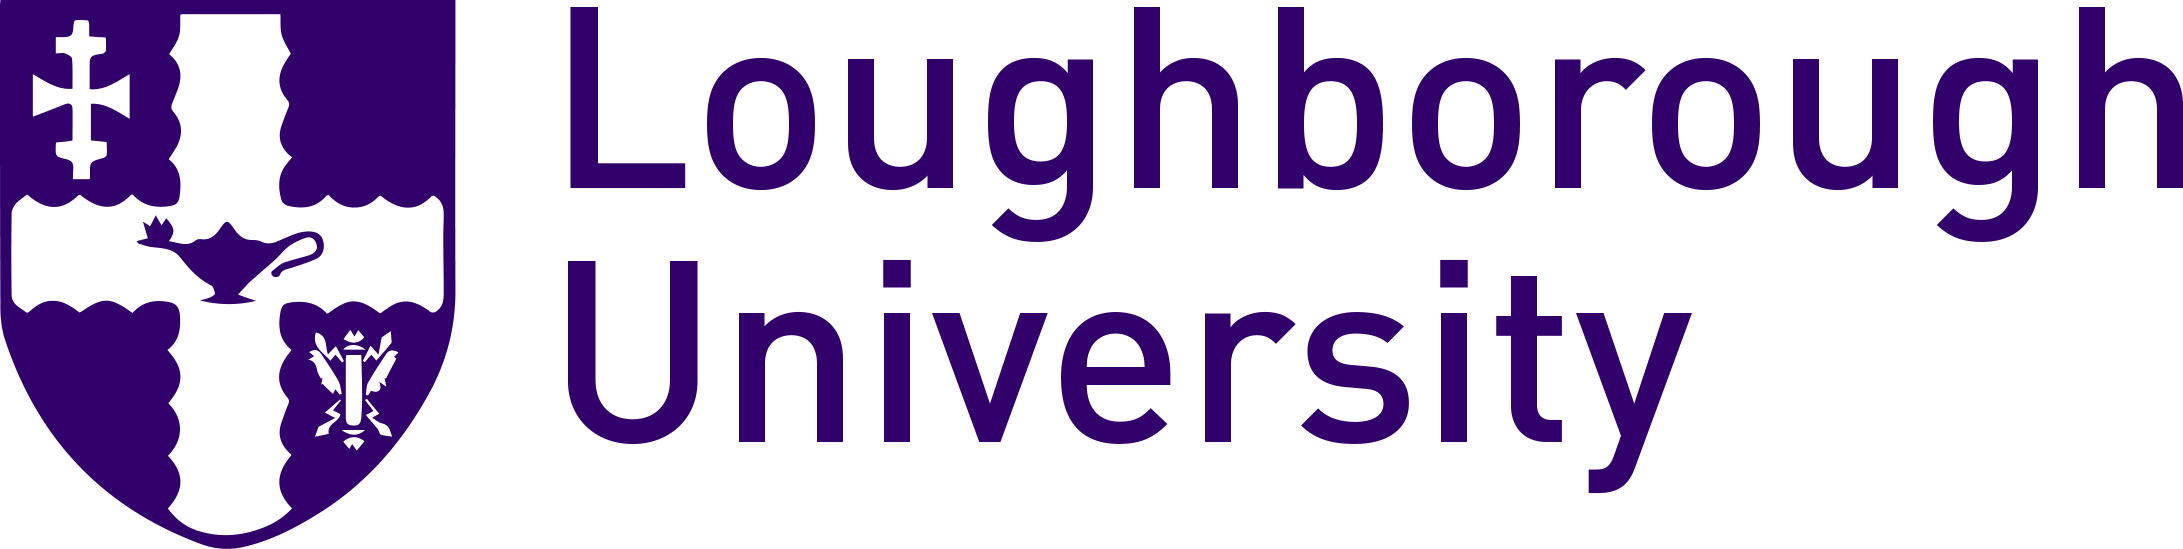 Loughborough University